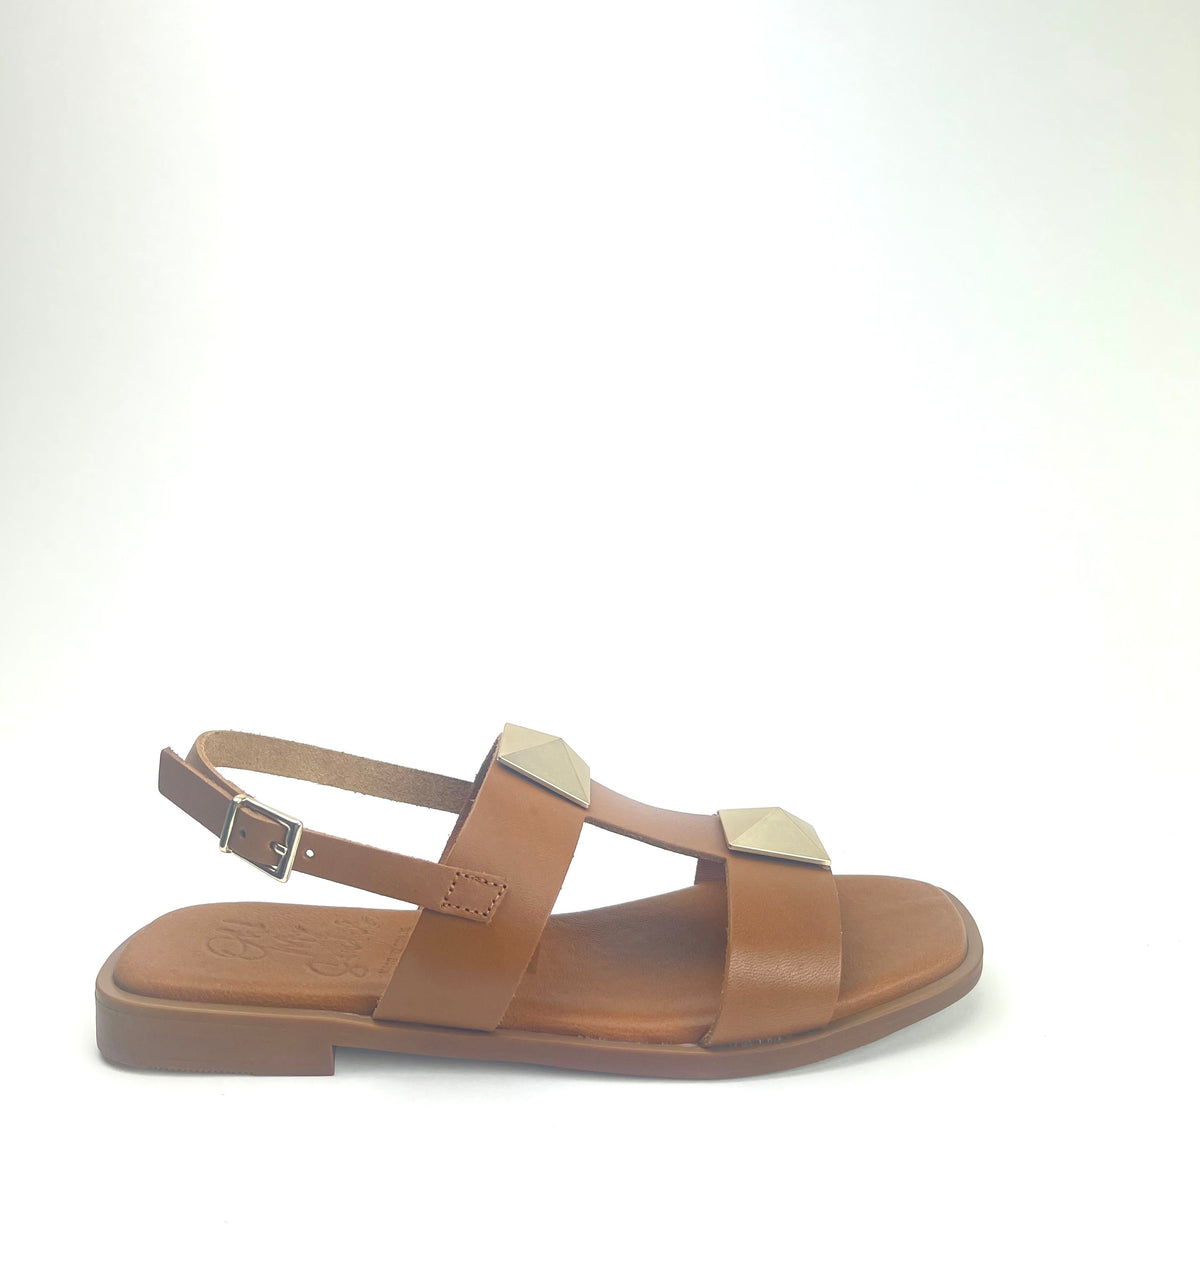 Oh My Sandals - 5329 Tan Stud Sandal